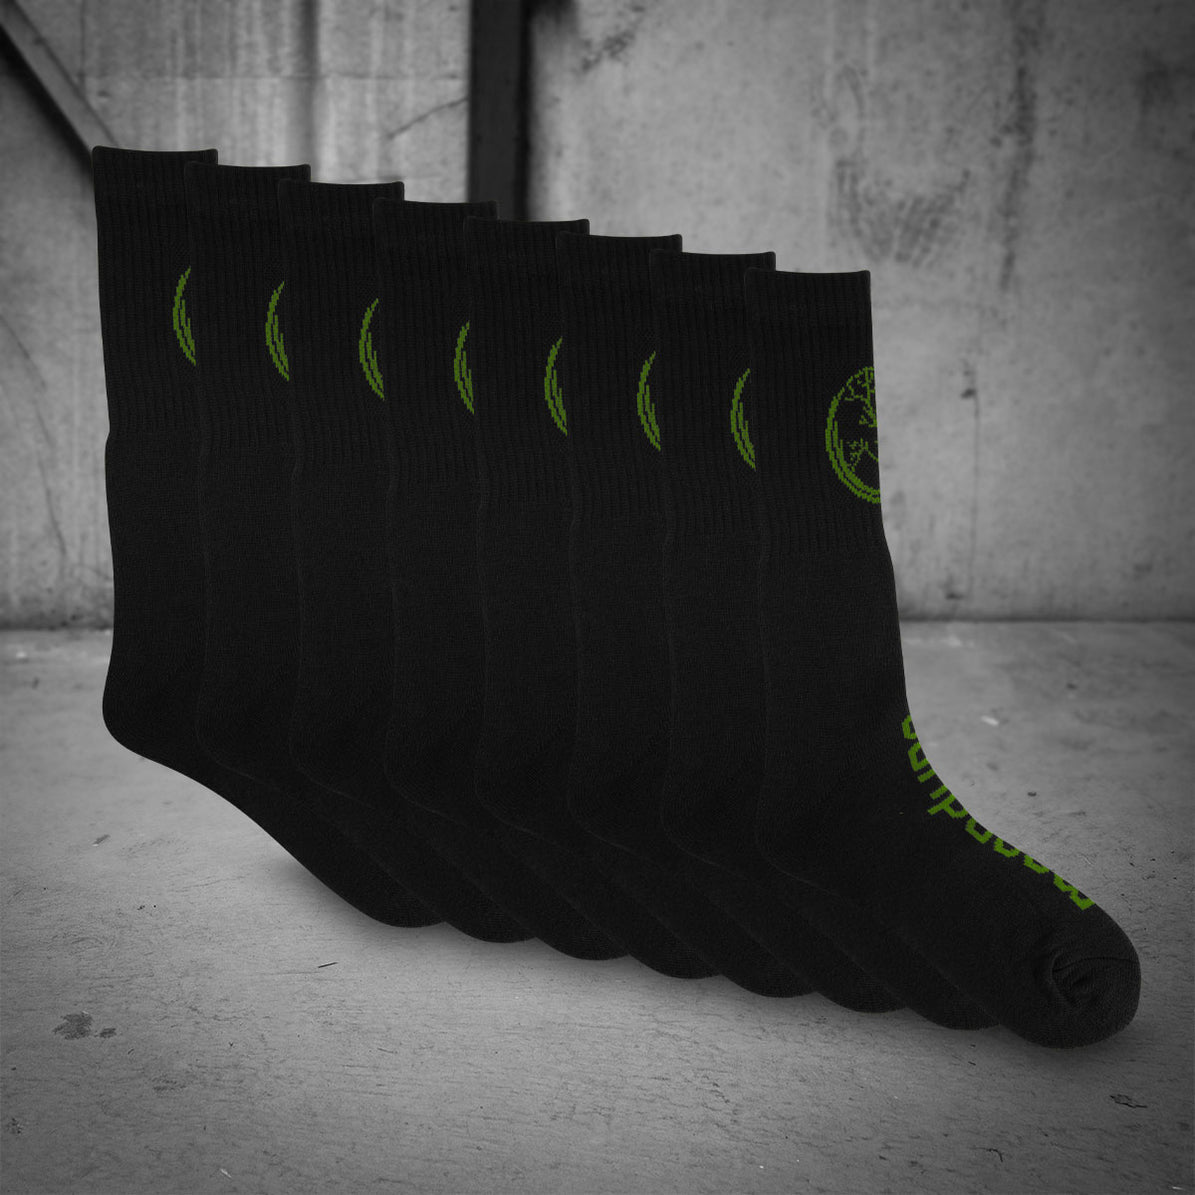 4 Pair Premium Bamboo / Polyester Promo Socks Black Size 7-12 M00B0712-4BK by Moondyne